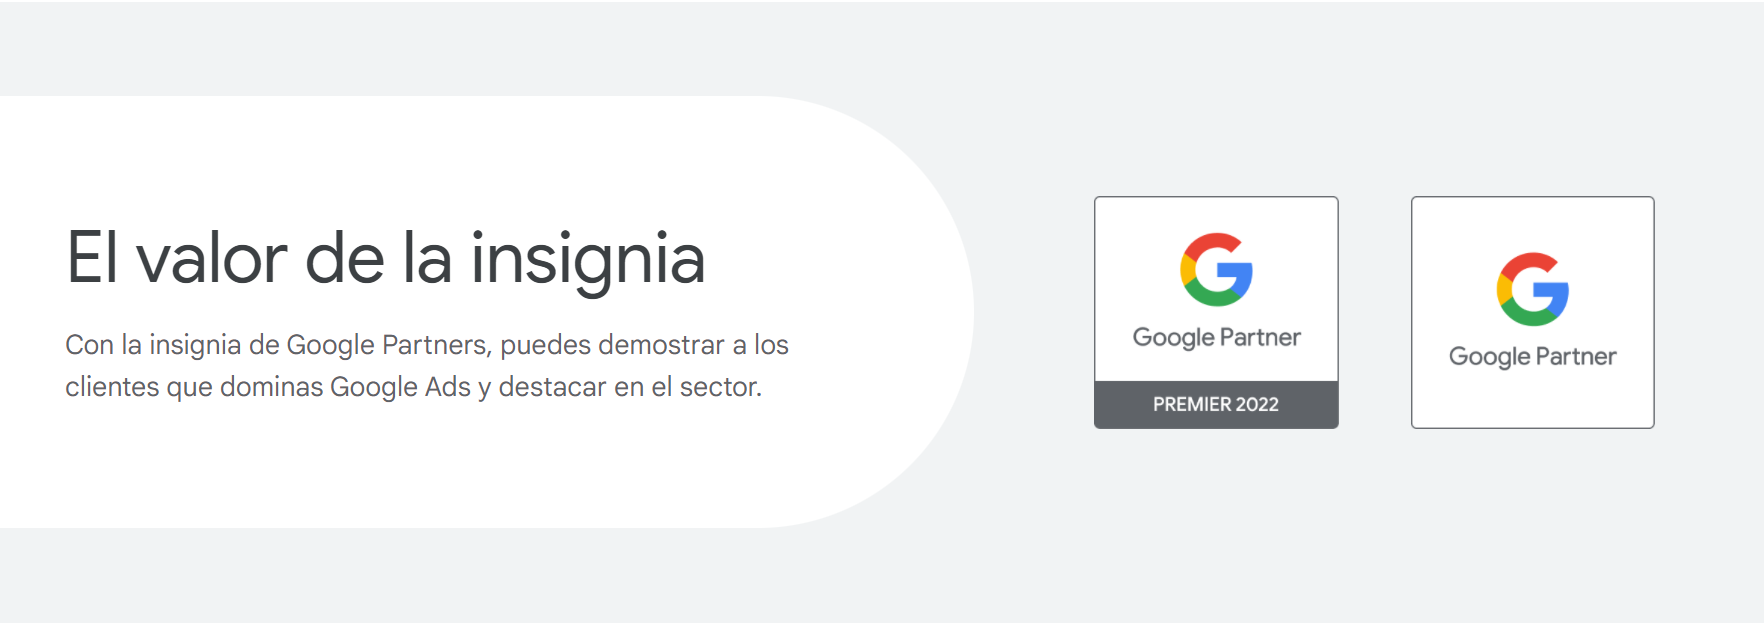 insignia de google partners premier nineclicks agencia digital SEM y SEO